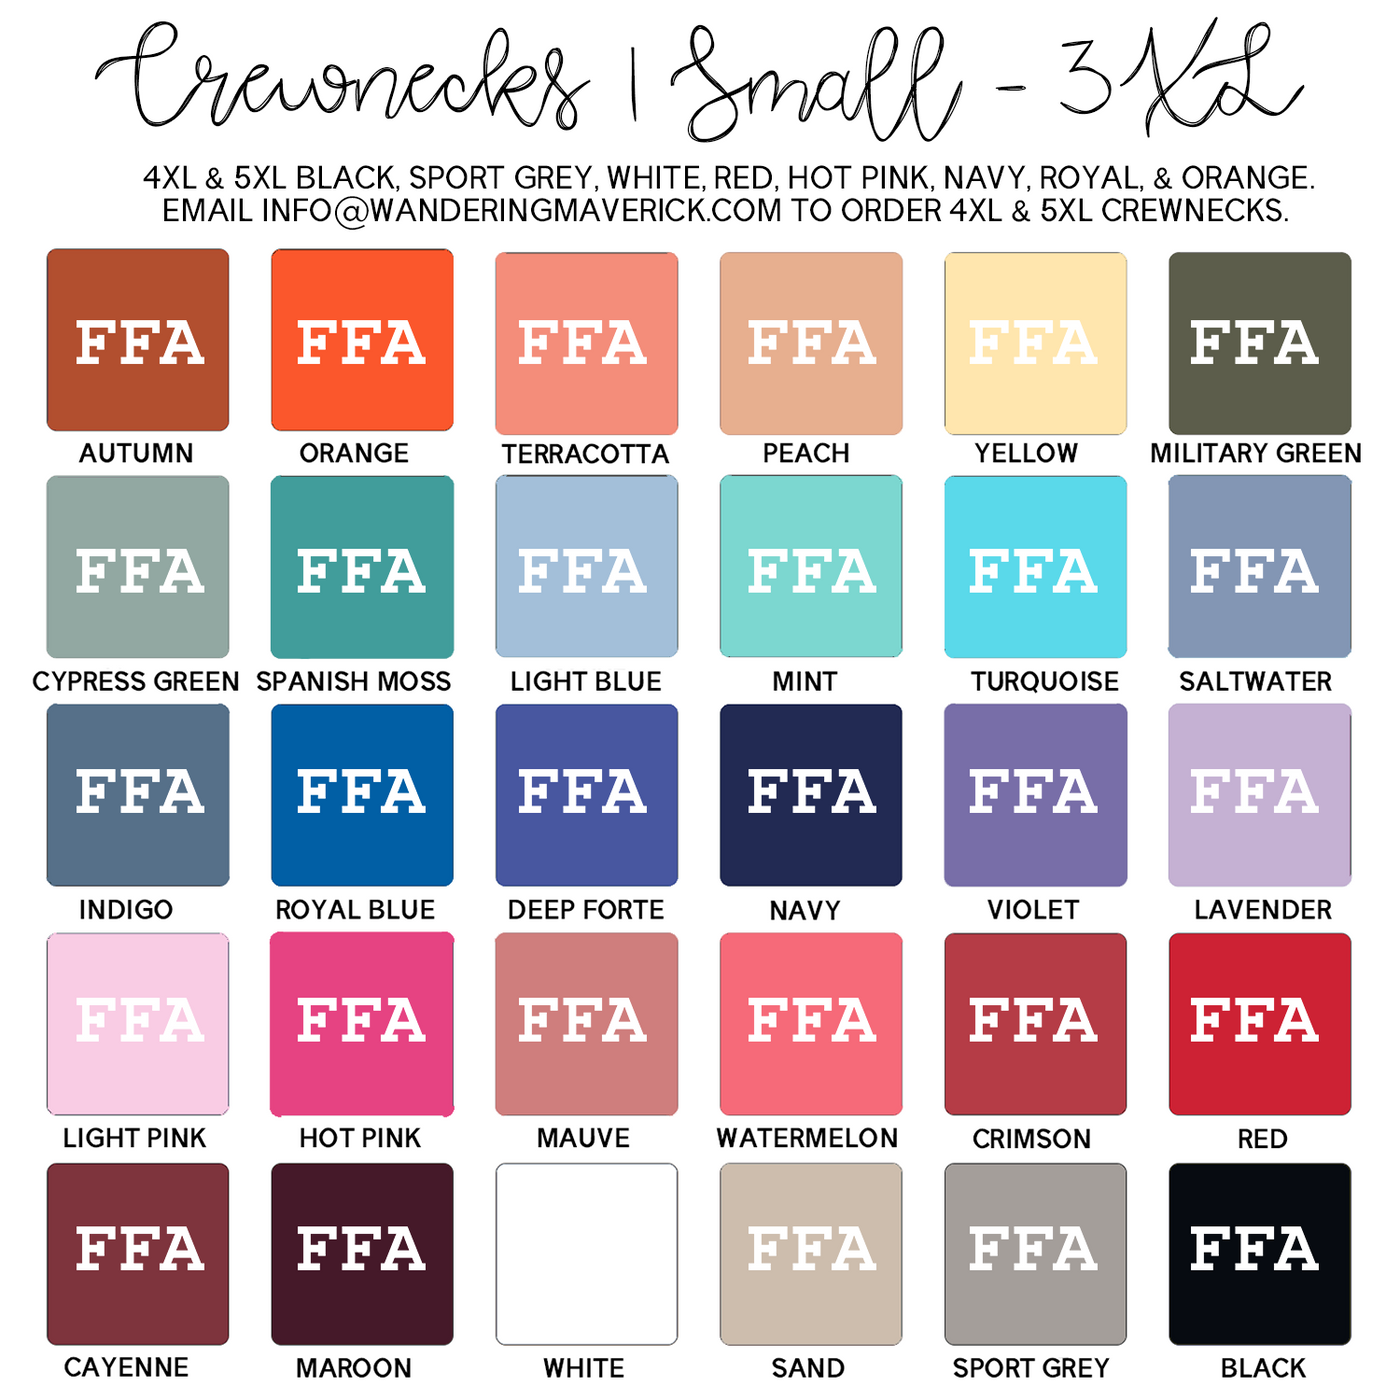 FFA White Ink Crewneck (S-3XL) - Multiple Colors!